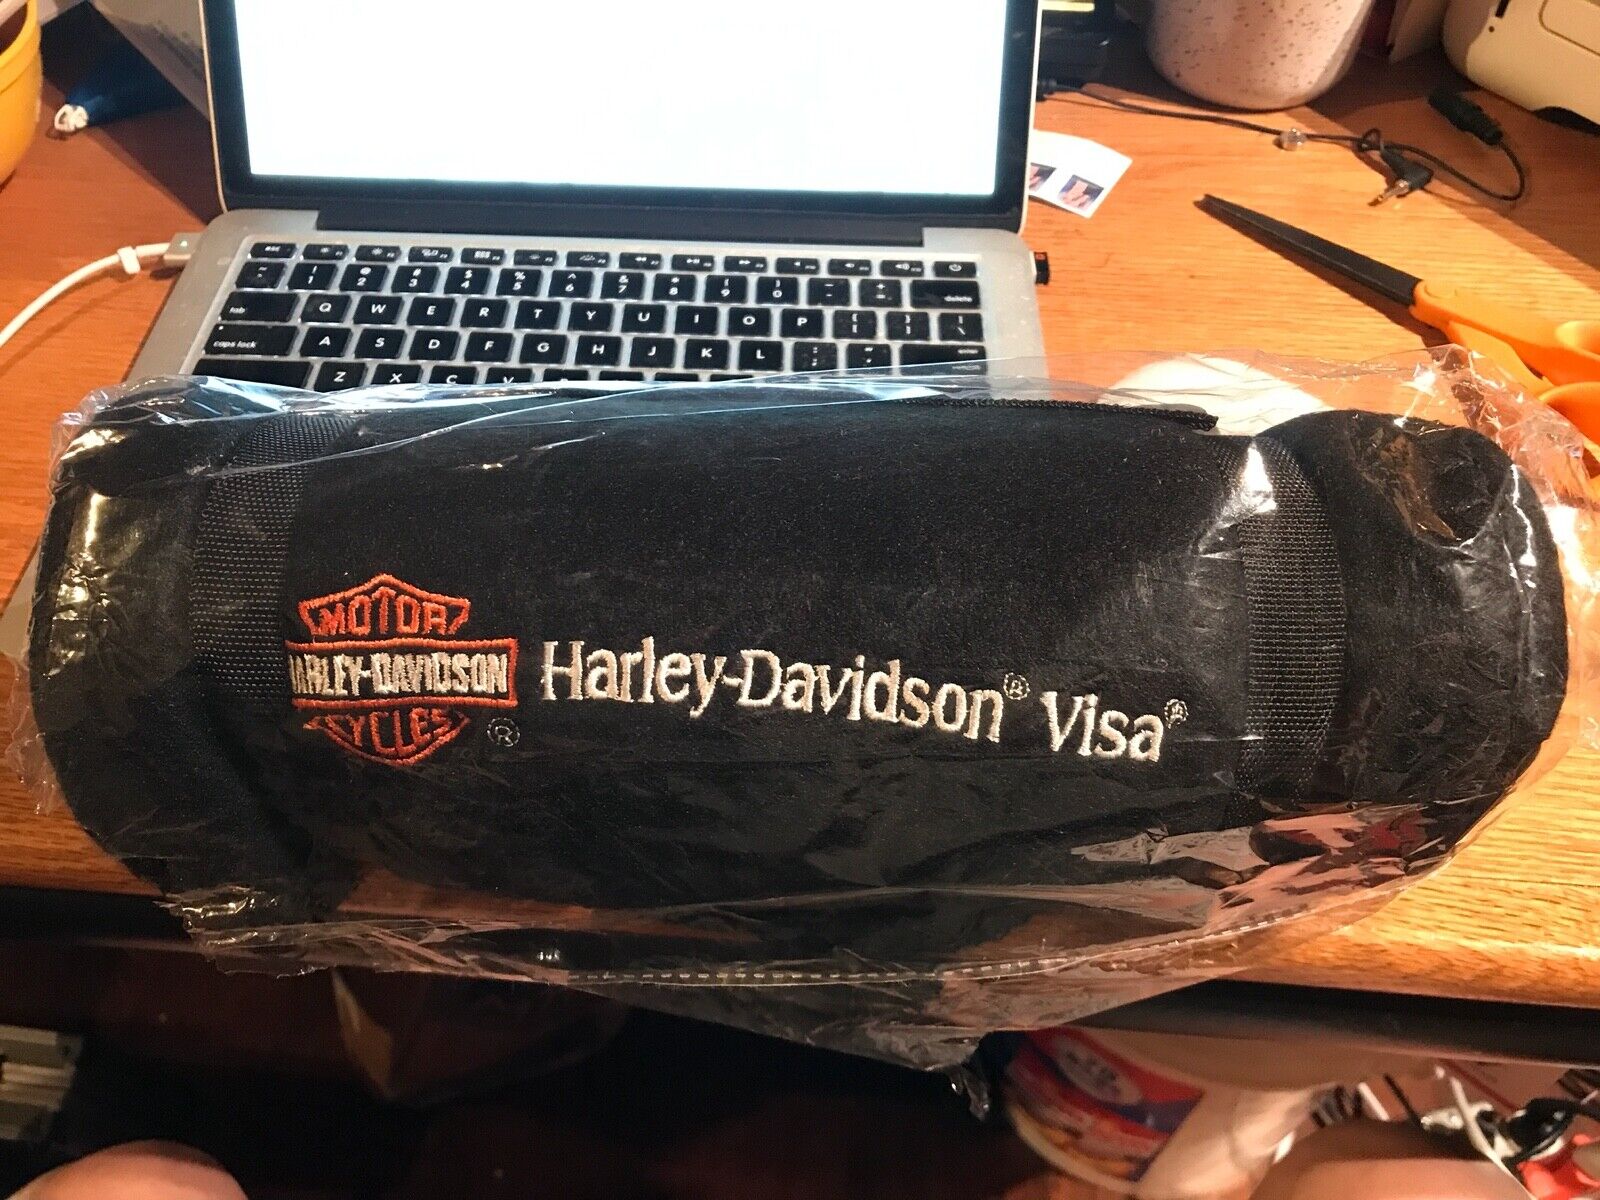 Harley-Davidson Visa Fleece Blanket Throw New In Plastic Black Promo Travel Moto